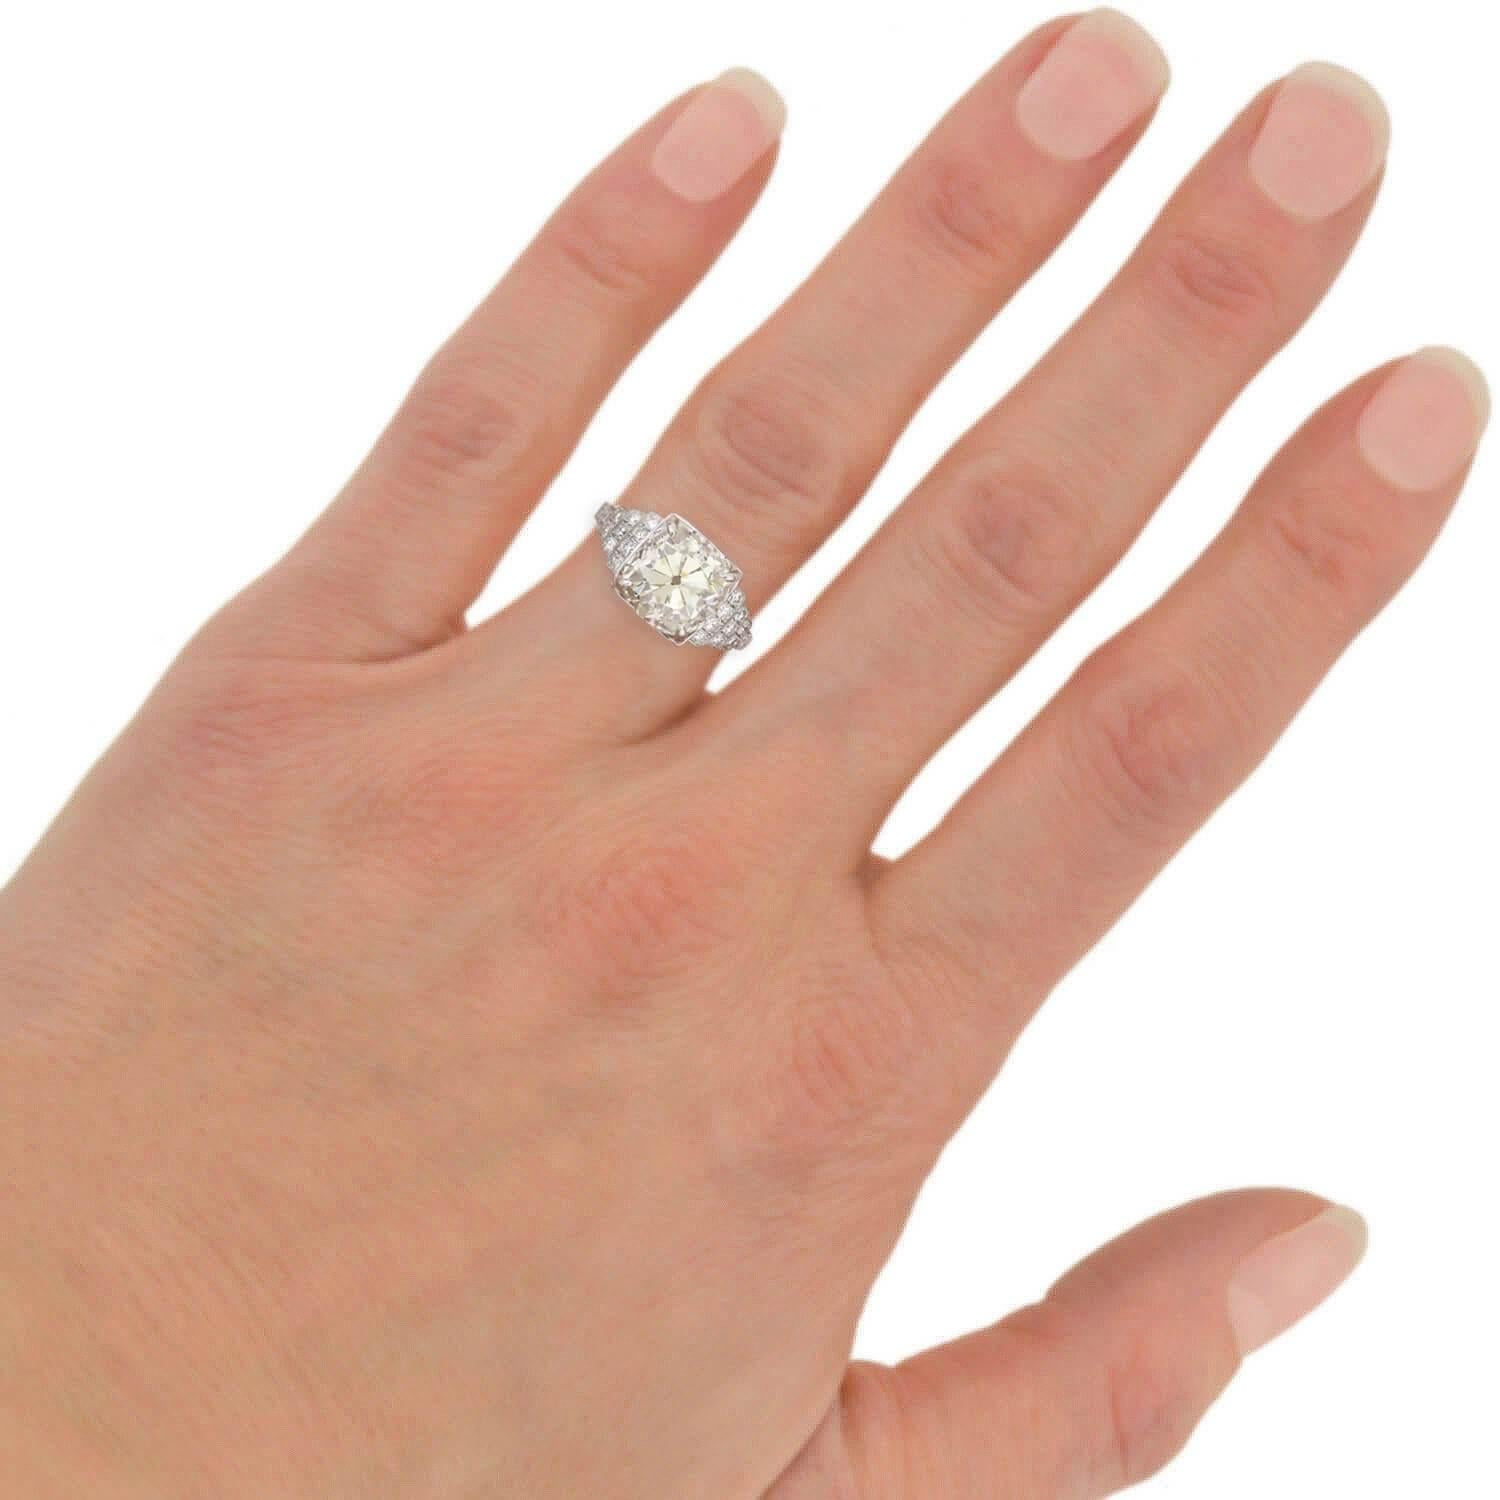 Art Deco Style 5.63 Carat Center Diamond Engagement Ring For Sale 1